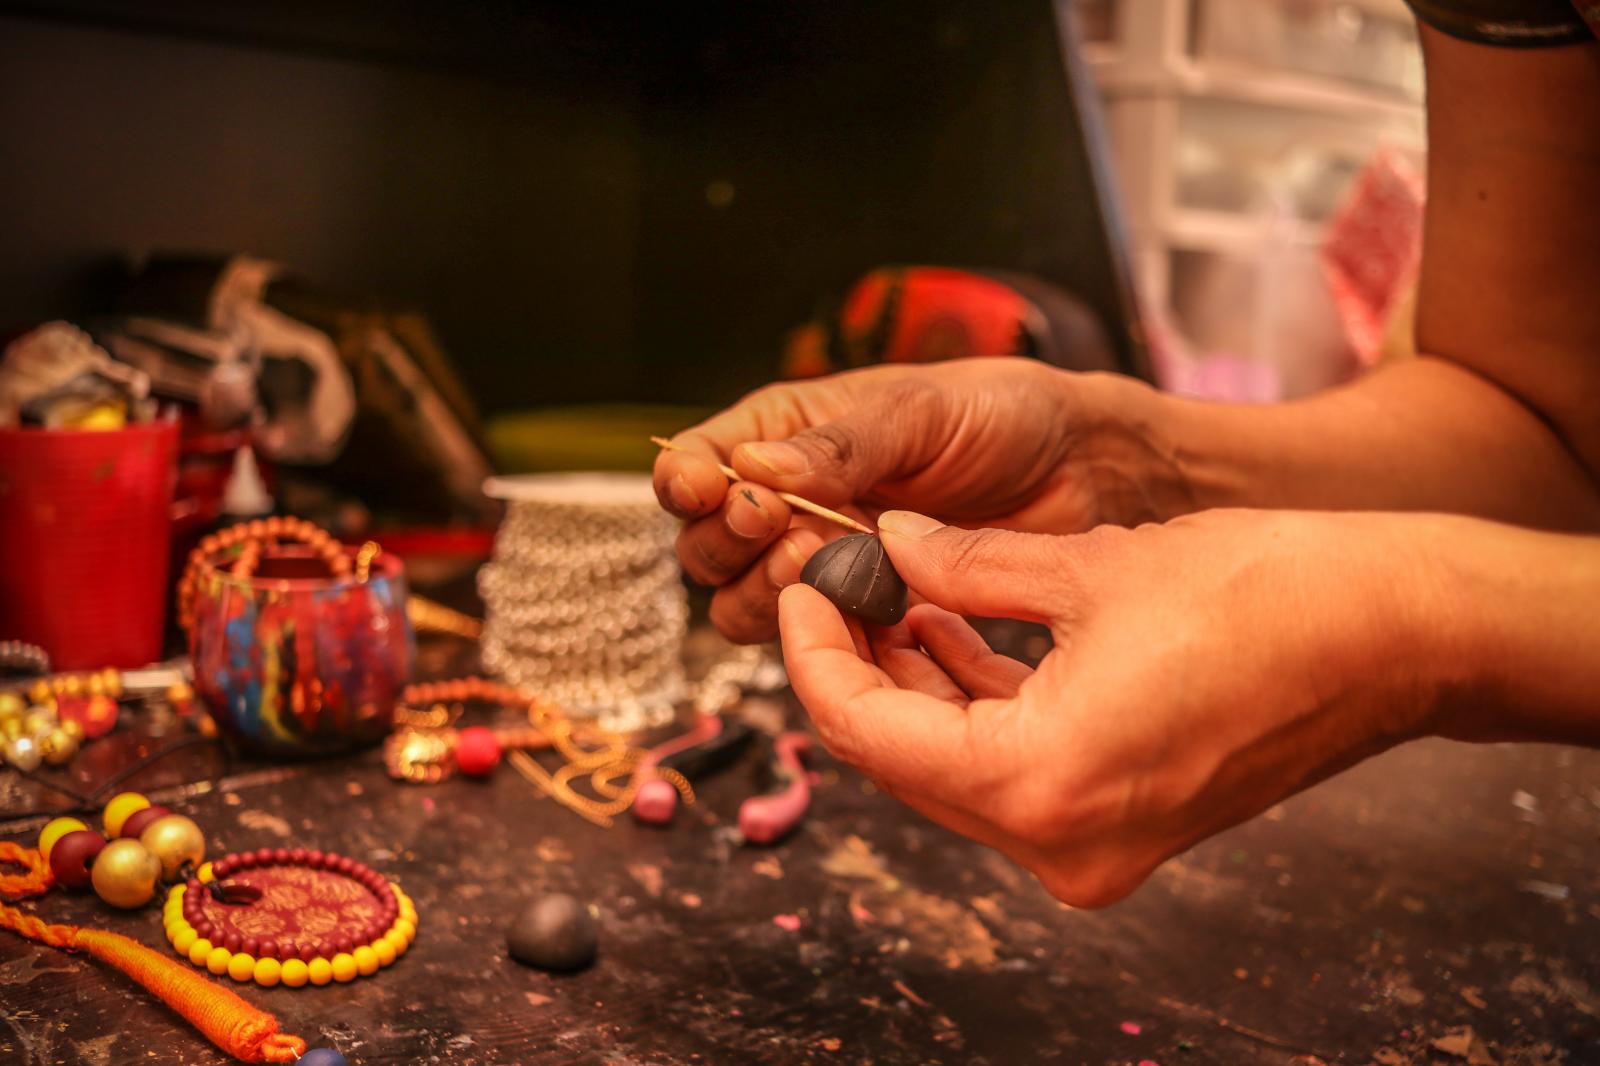 Vani Haridas makes clay earring...if., on Saturday, Dec 14, 2019.